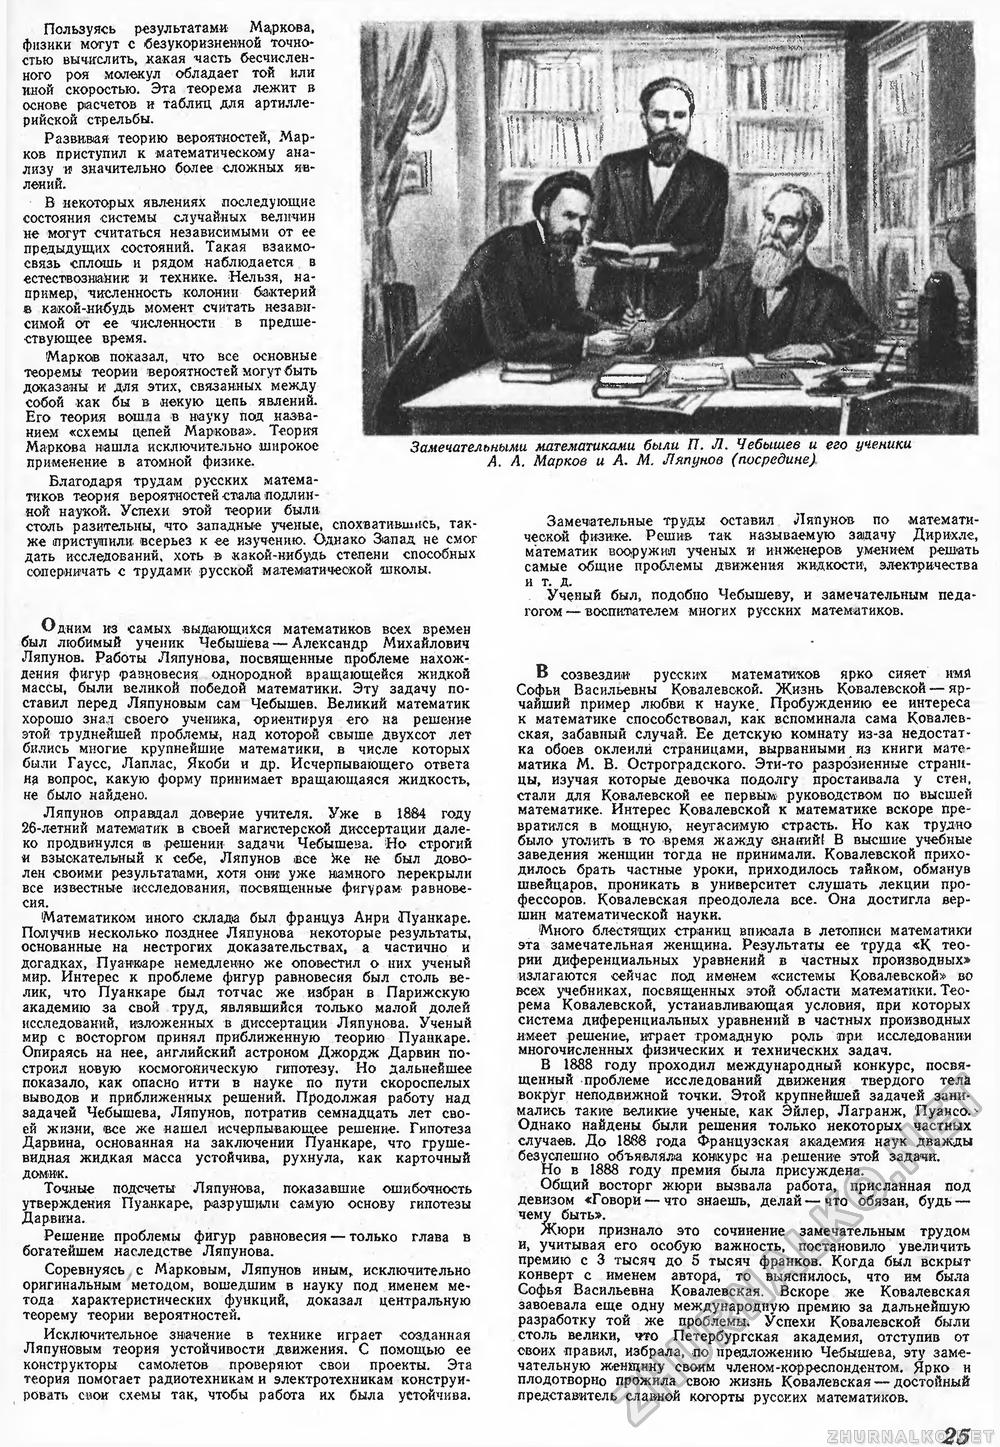 Техника - молодёжи 1948-07, страница 27